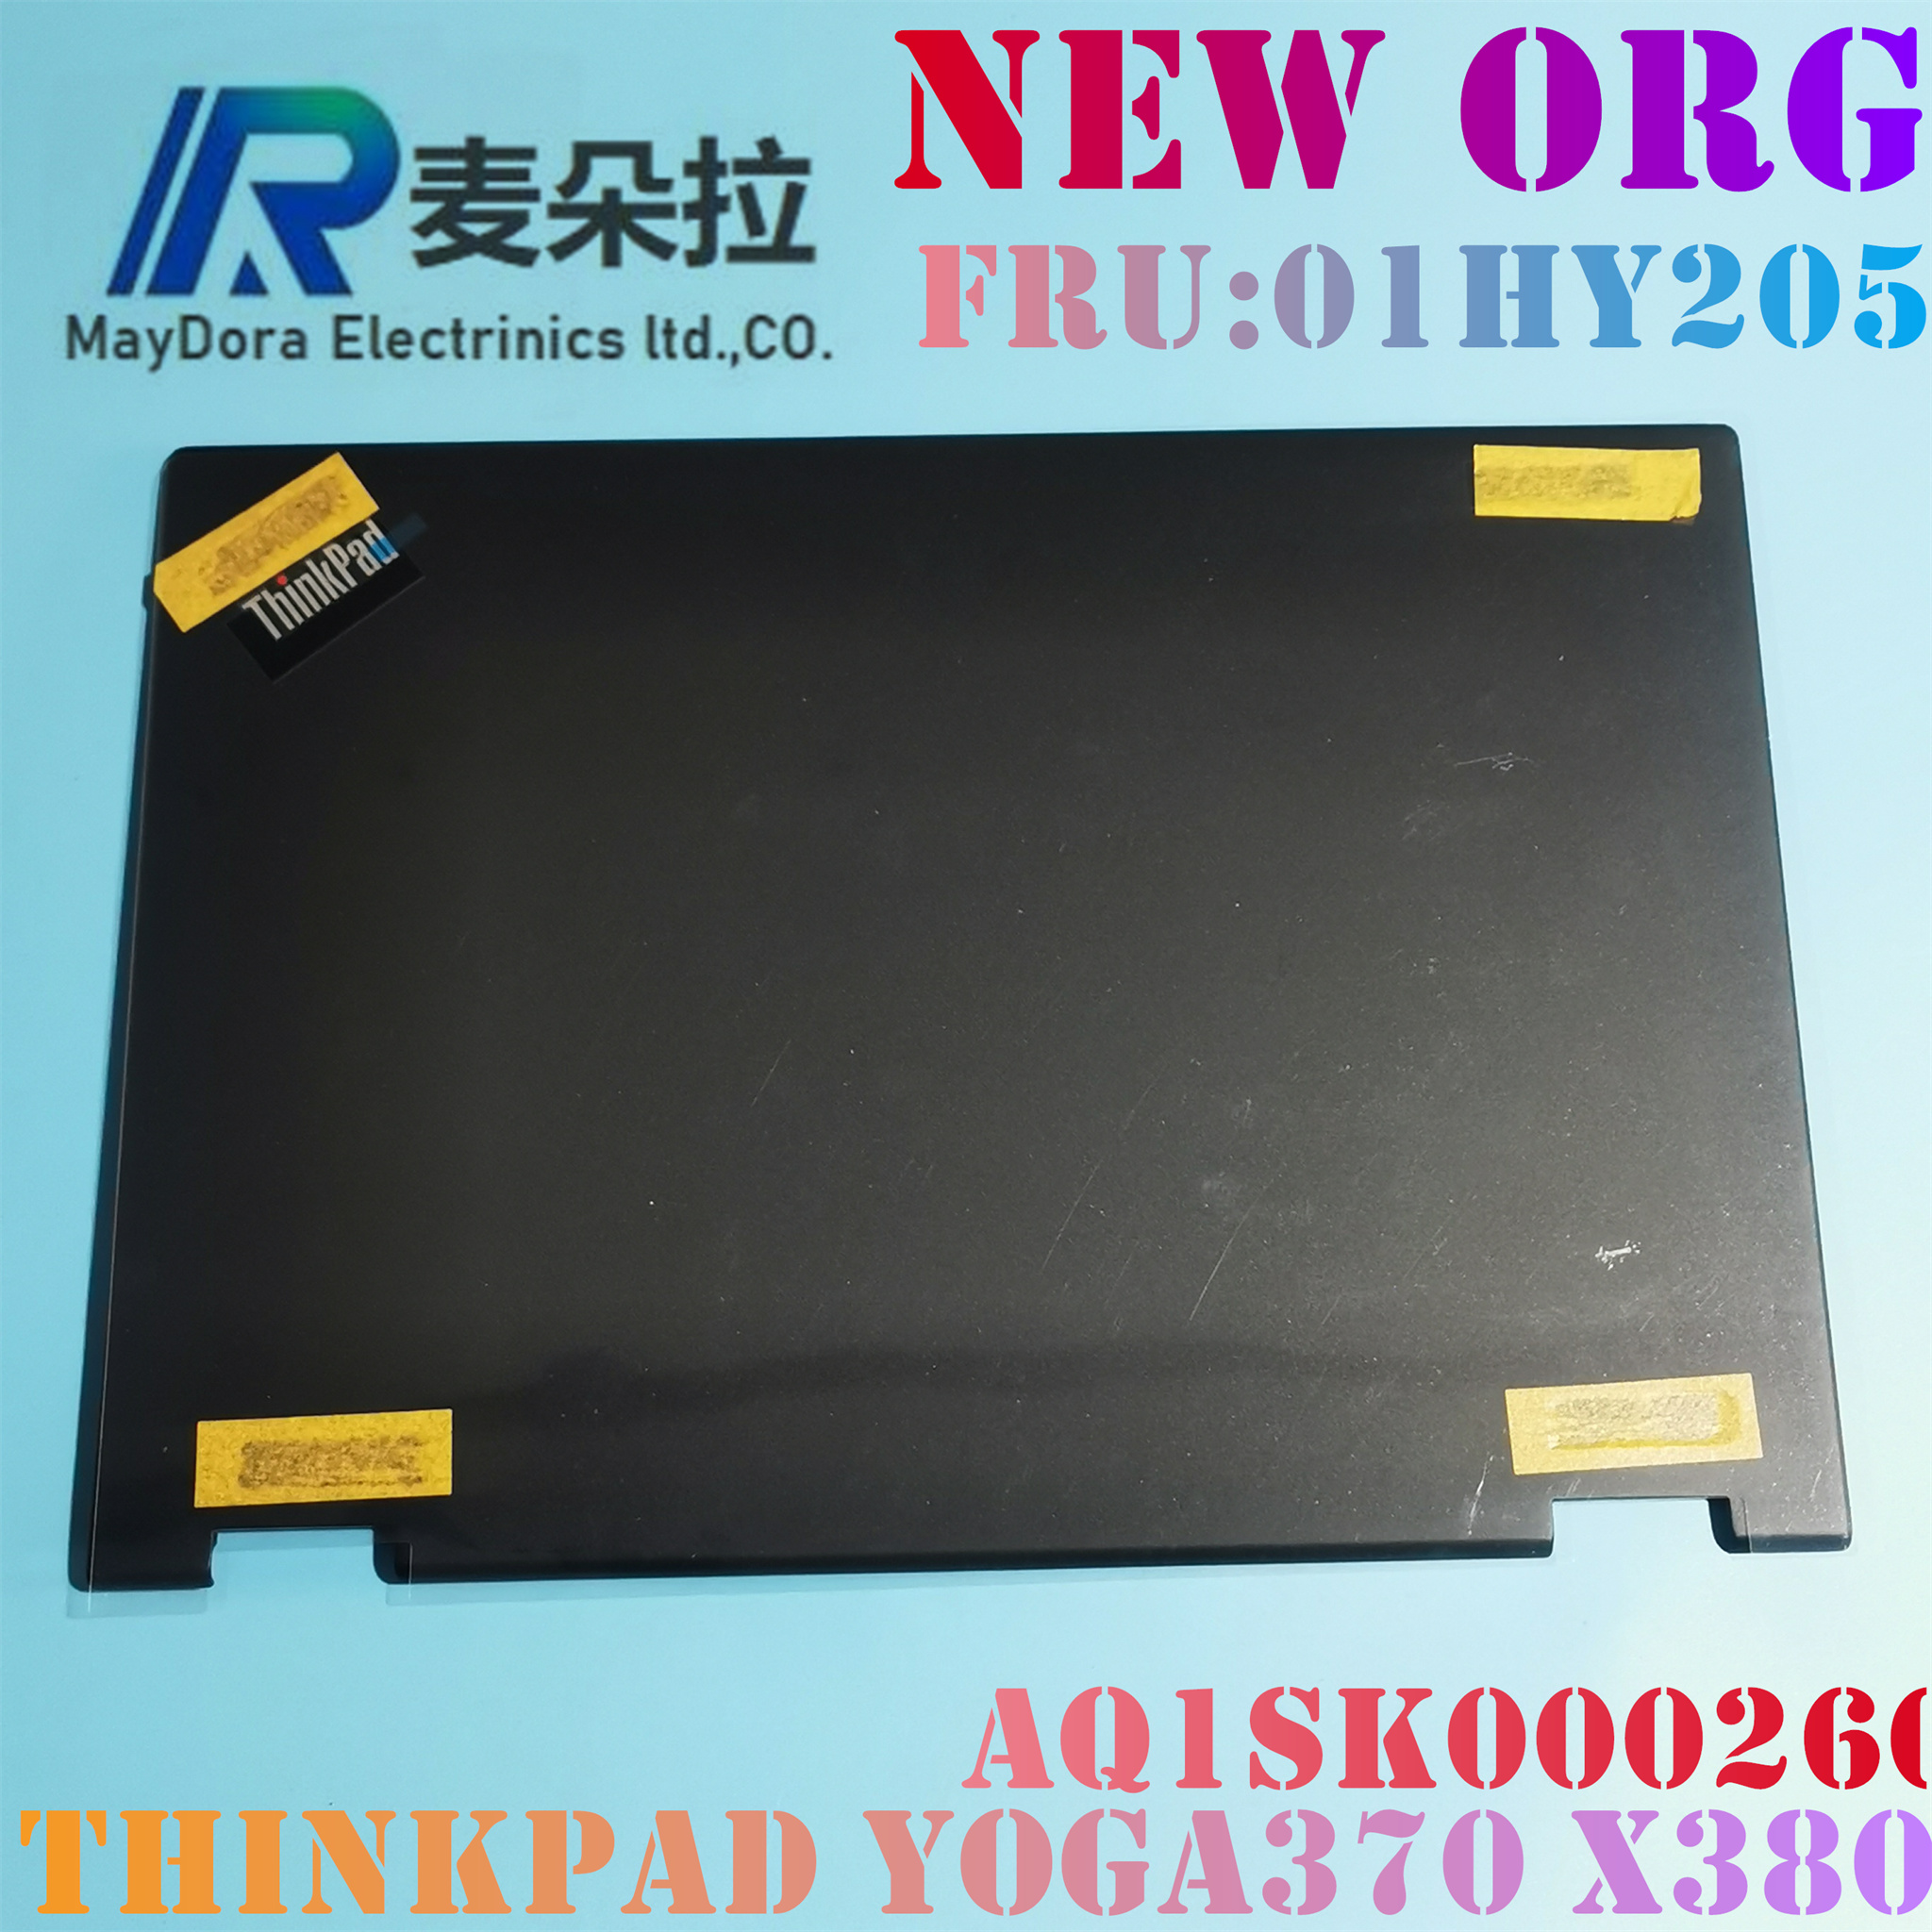 New Gmail laptop case for ThinkPad yoga370 X380 yoga LCD back cover front bezel bottom base Black 01hy205 02dahl